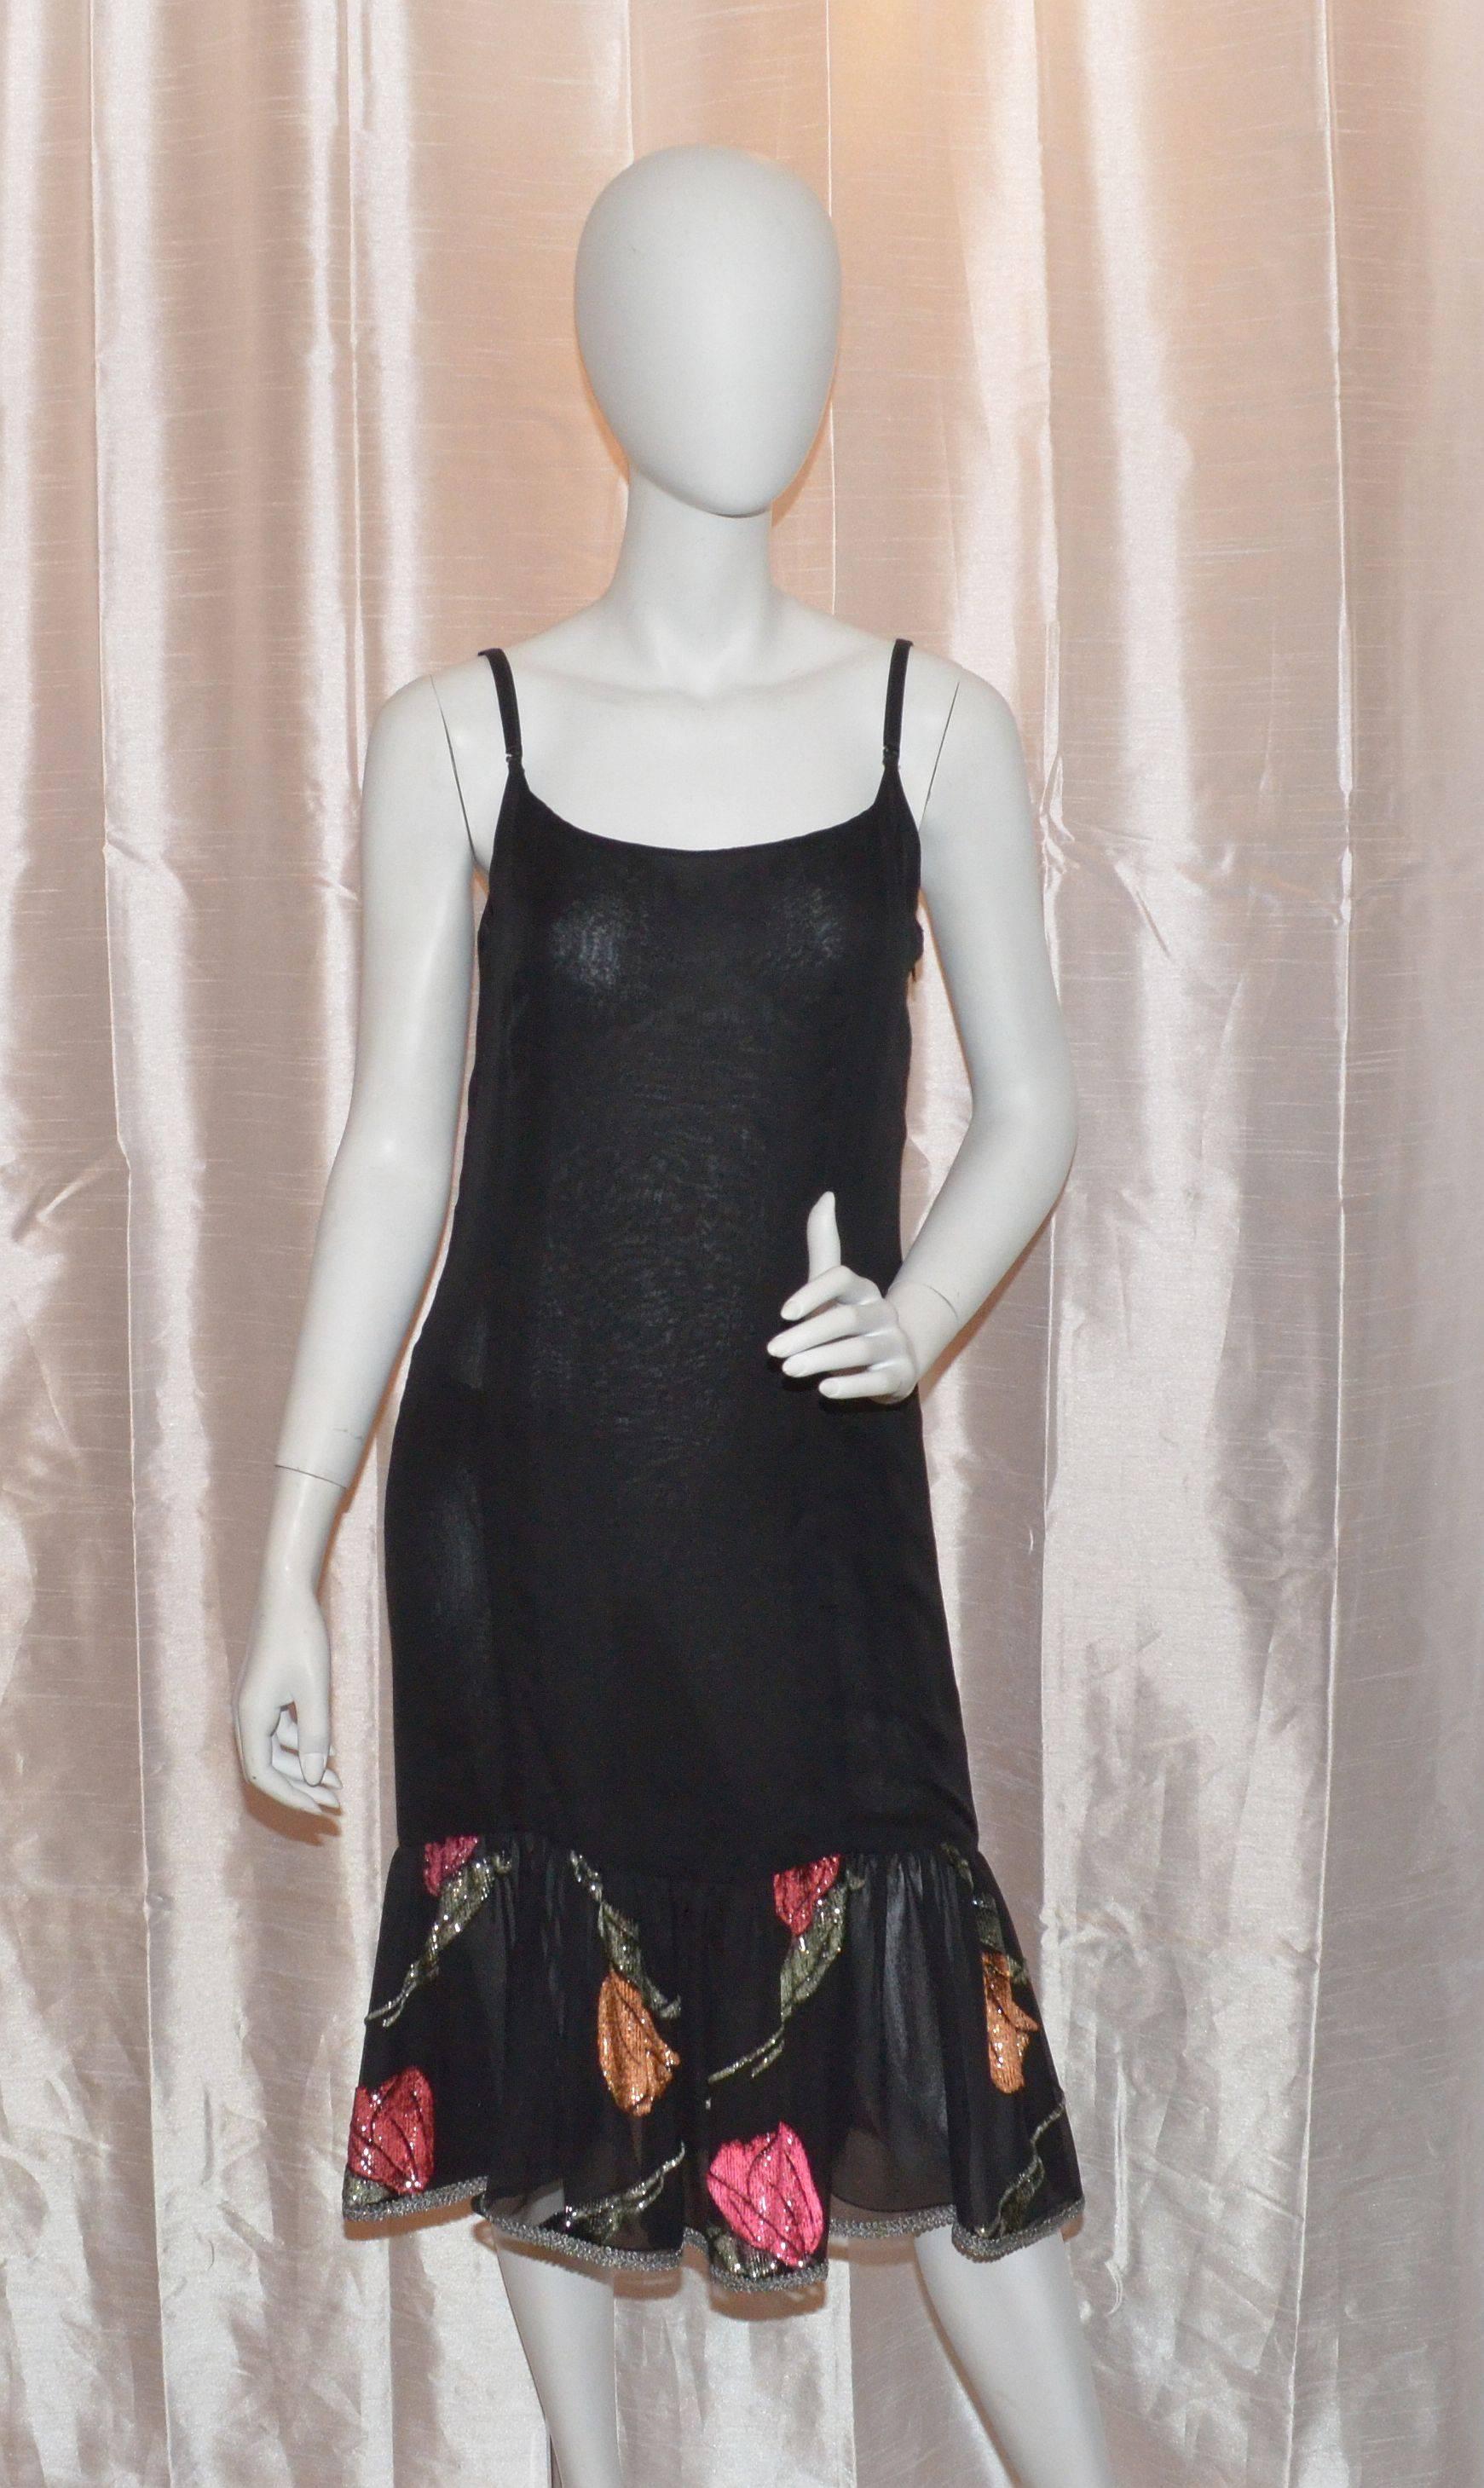 Pauline Trigere Cut Velvet Silk Chiffon Dress In Excellent Condition For Sale In Carmel, CA